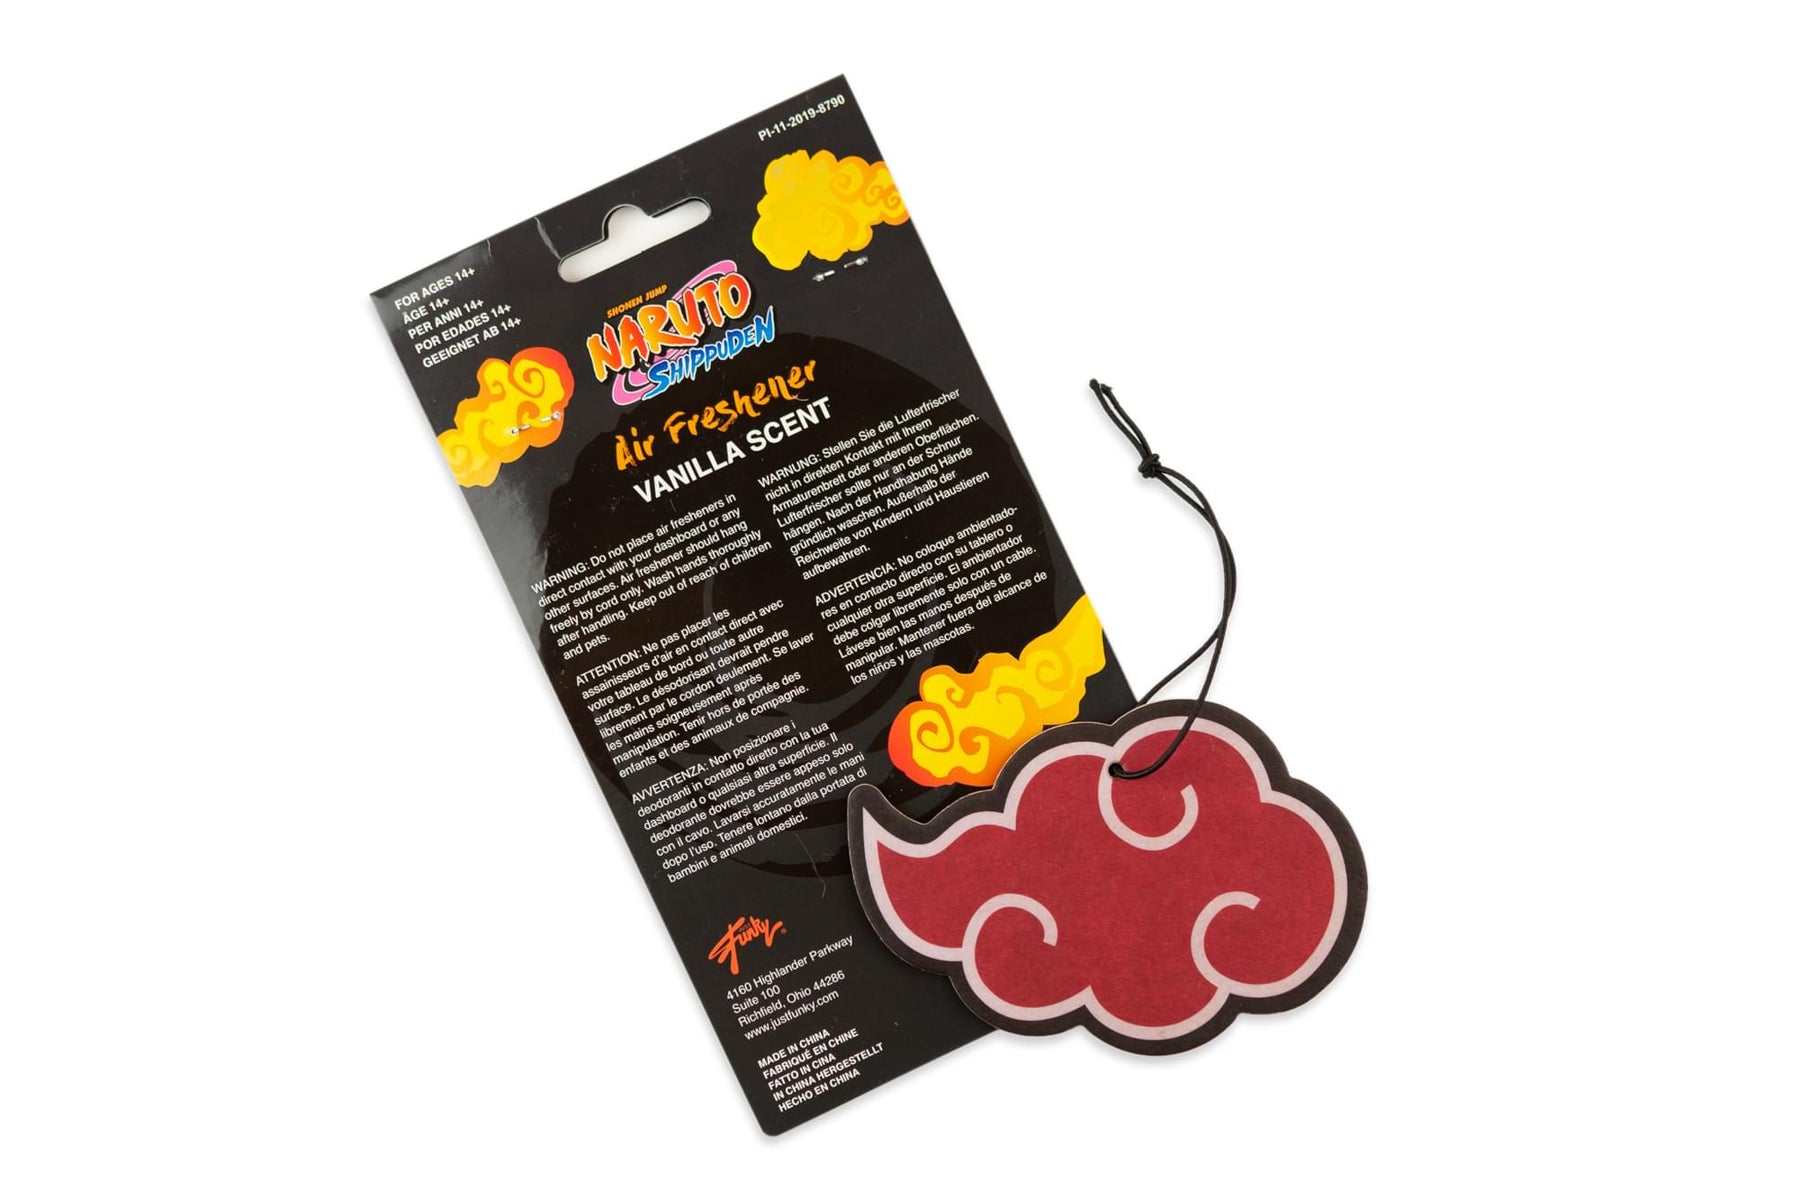 Naruto Akatsuki Red Rain Cloud Hanging Car Air Freshener | Vanilla Scented